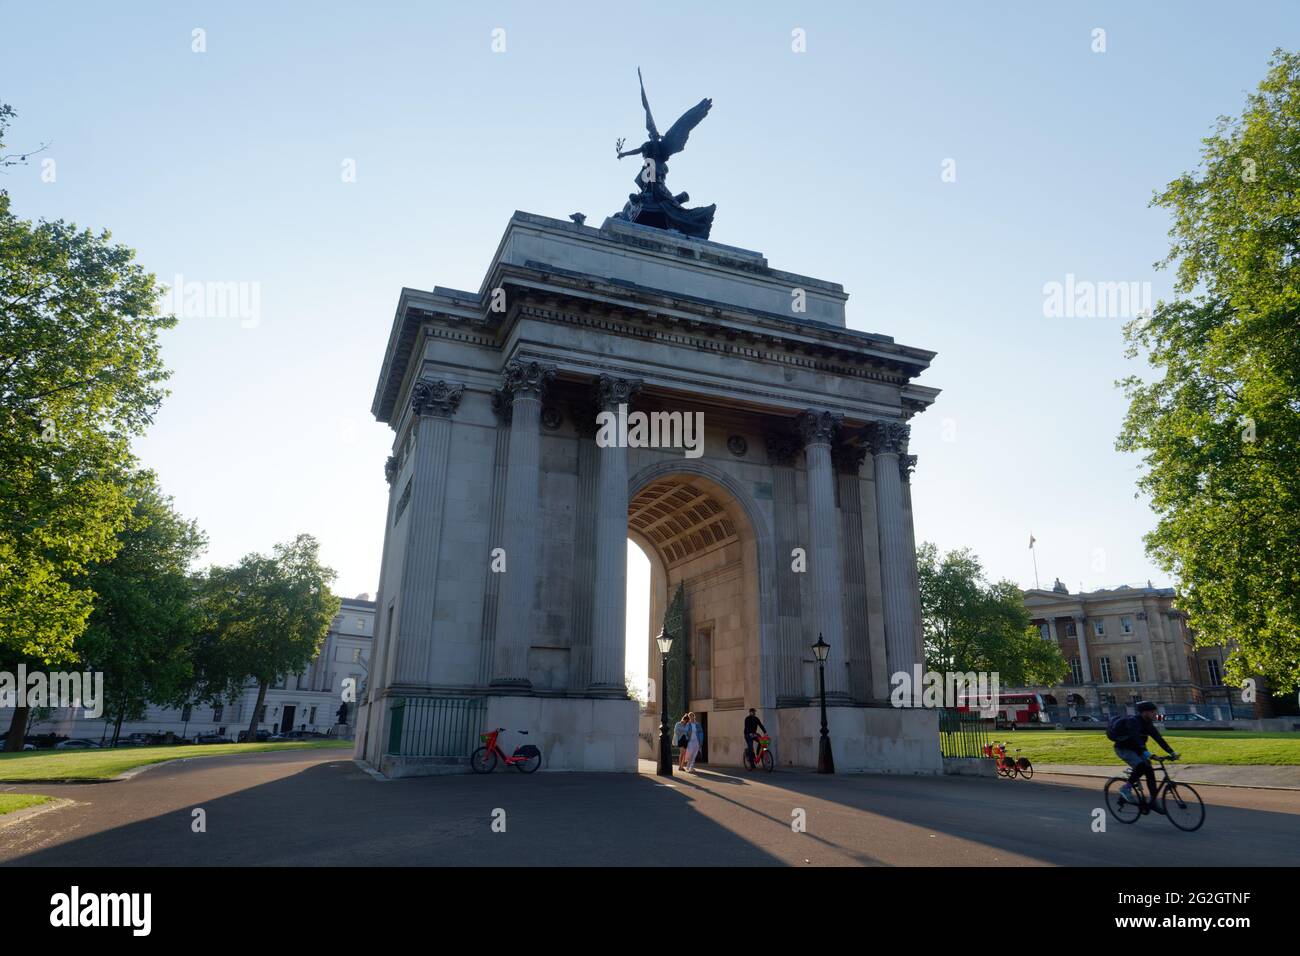 London, Greater London, England - 27. Mai 2021: Wellington Arch aka Constitution Arch in Hyde Park Corner Stockfoto